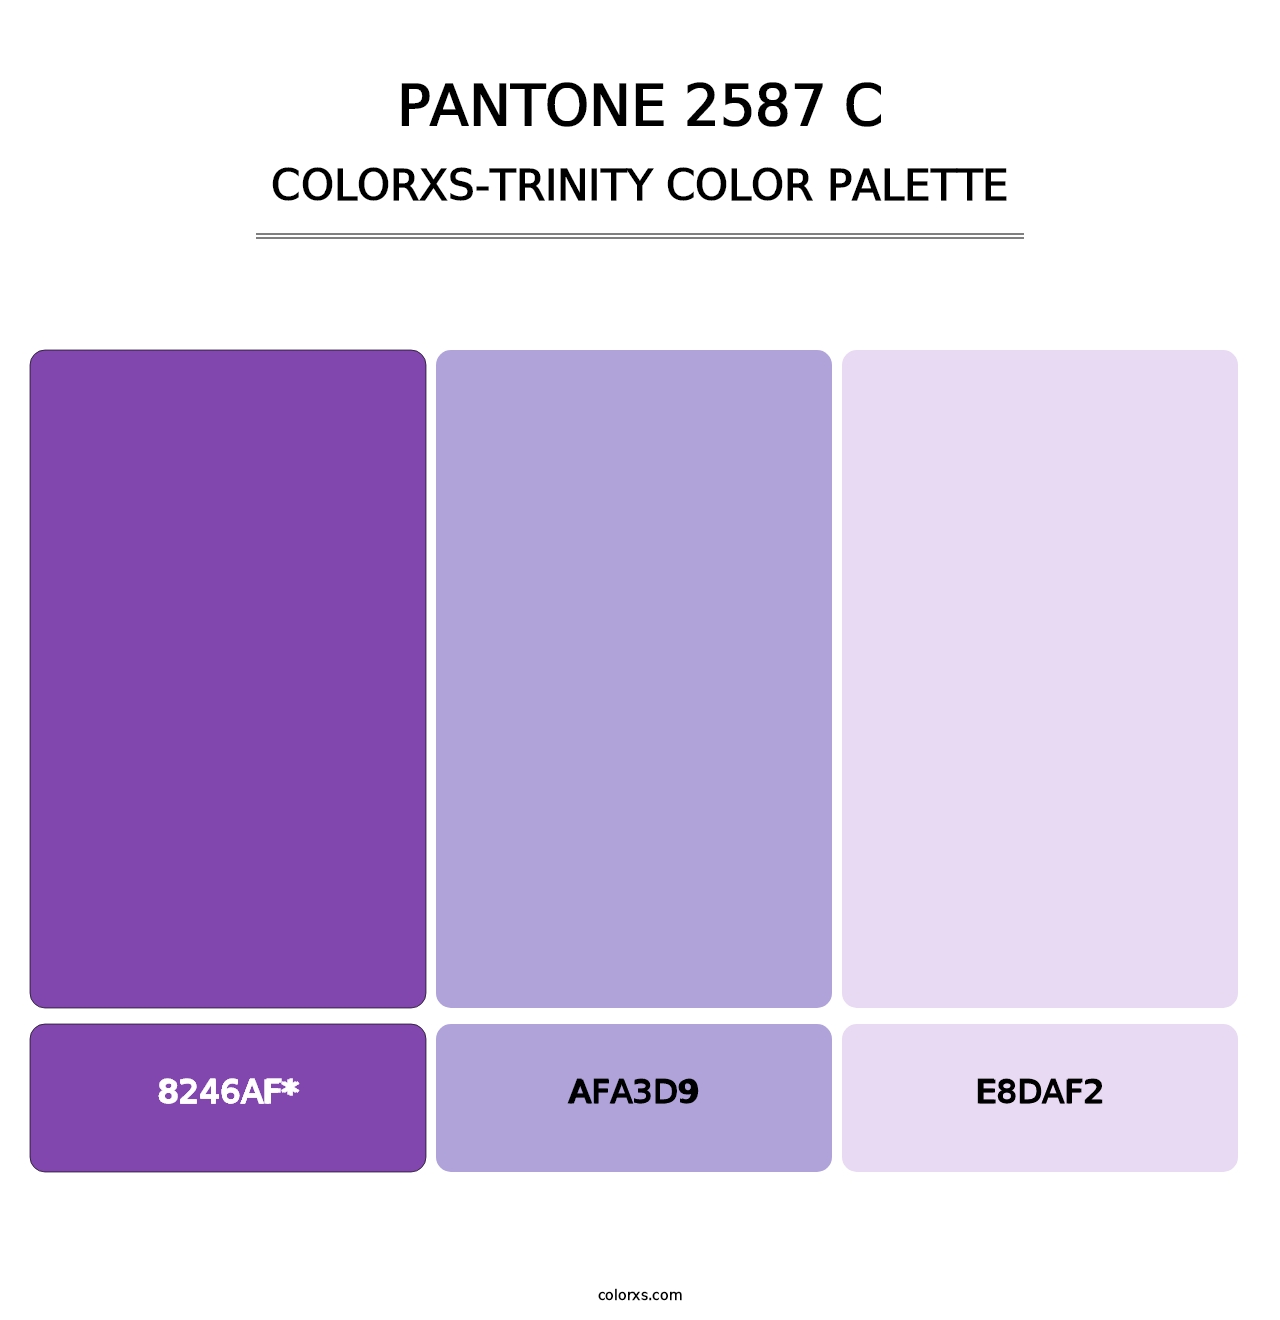 PANTONE 2587 C - Colorxs Trinity Palette